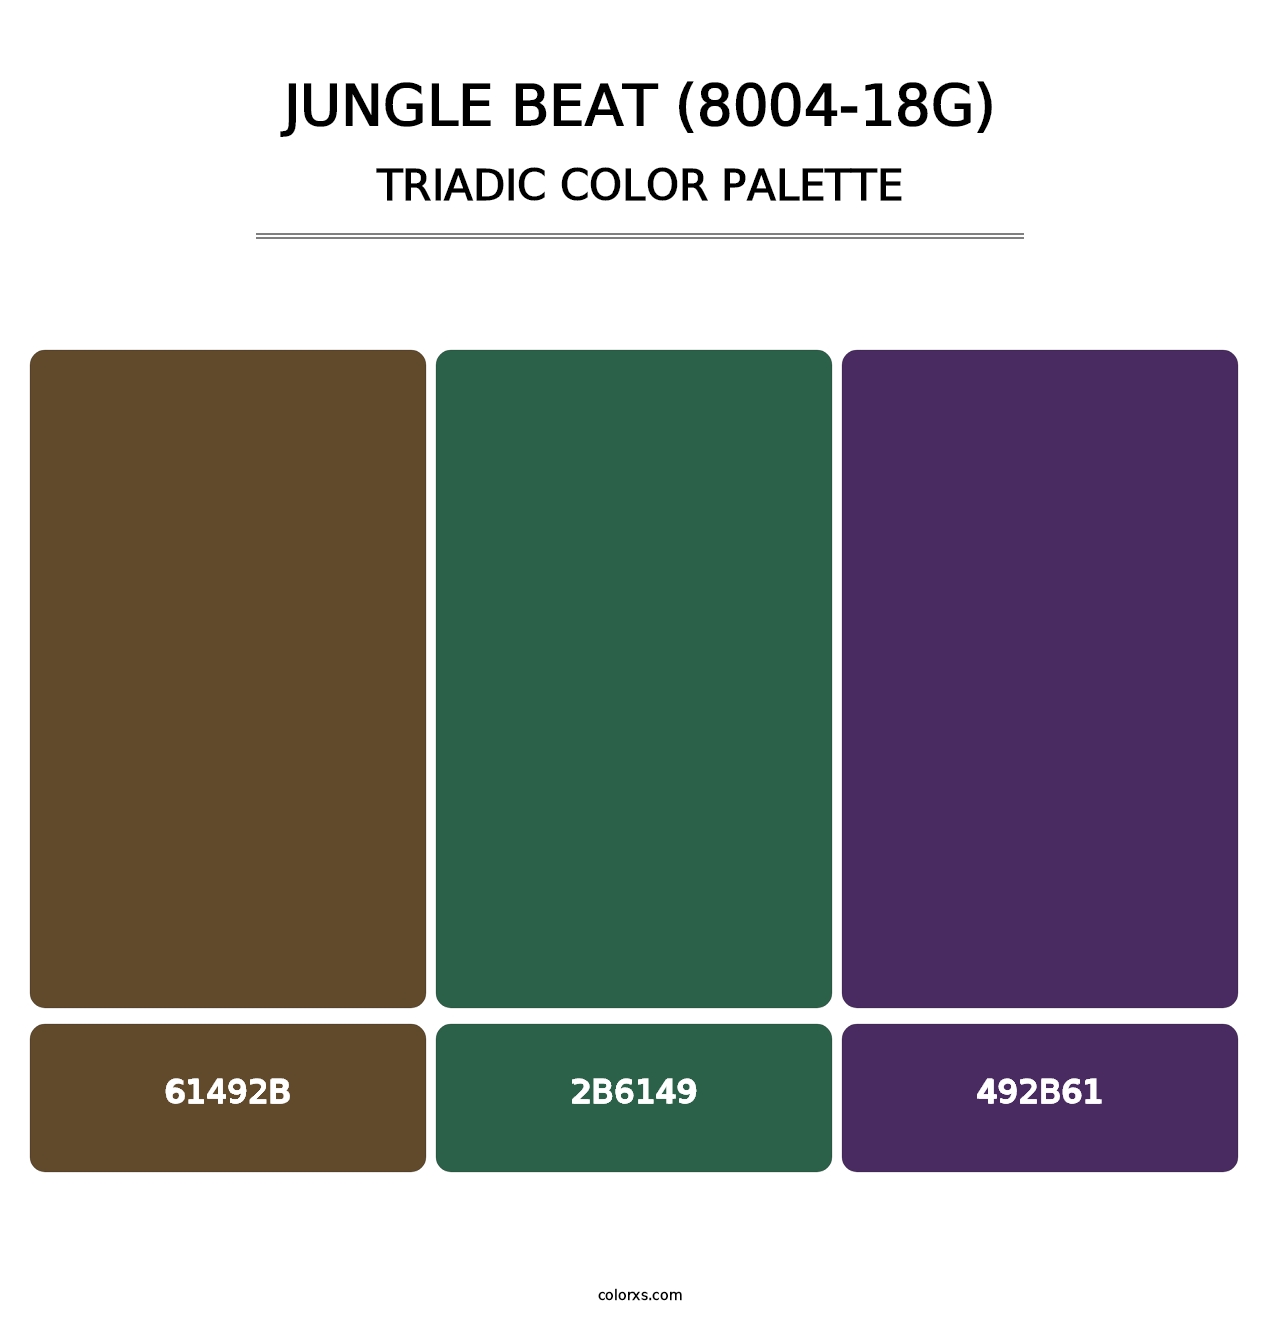 Jungle Beat (8004-18G) - Triadic Color Palette